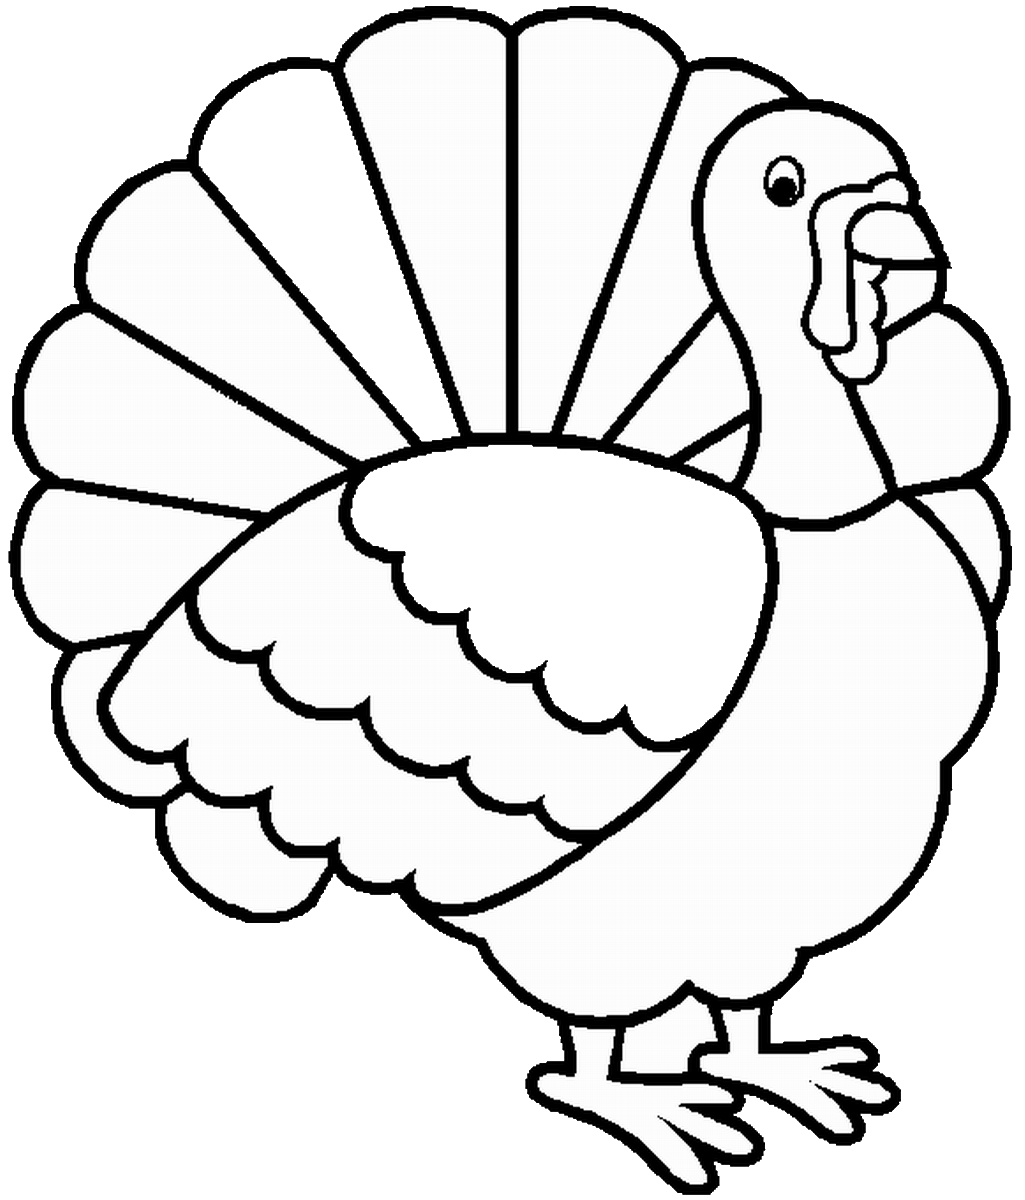 Turkey Dinner Drawing